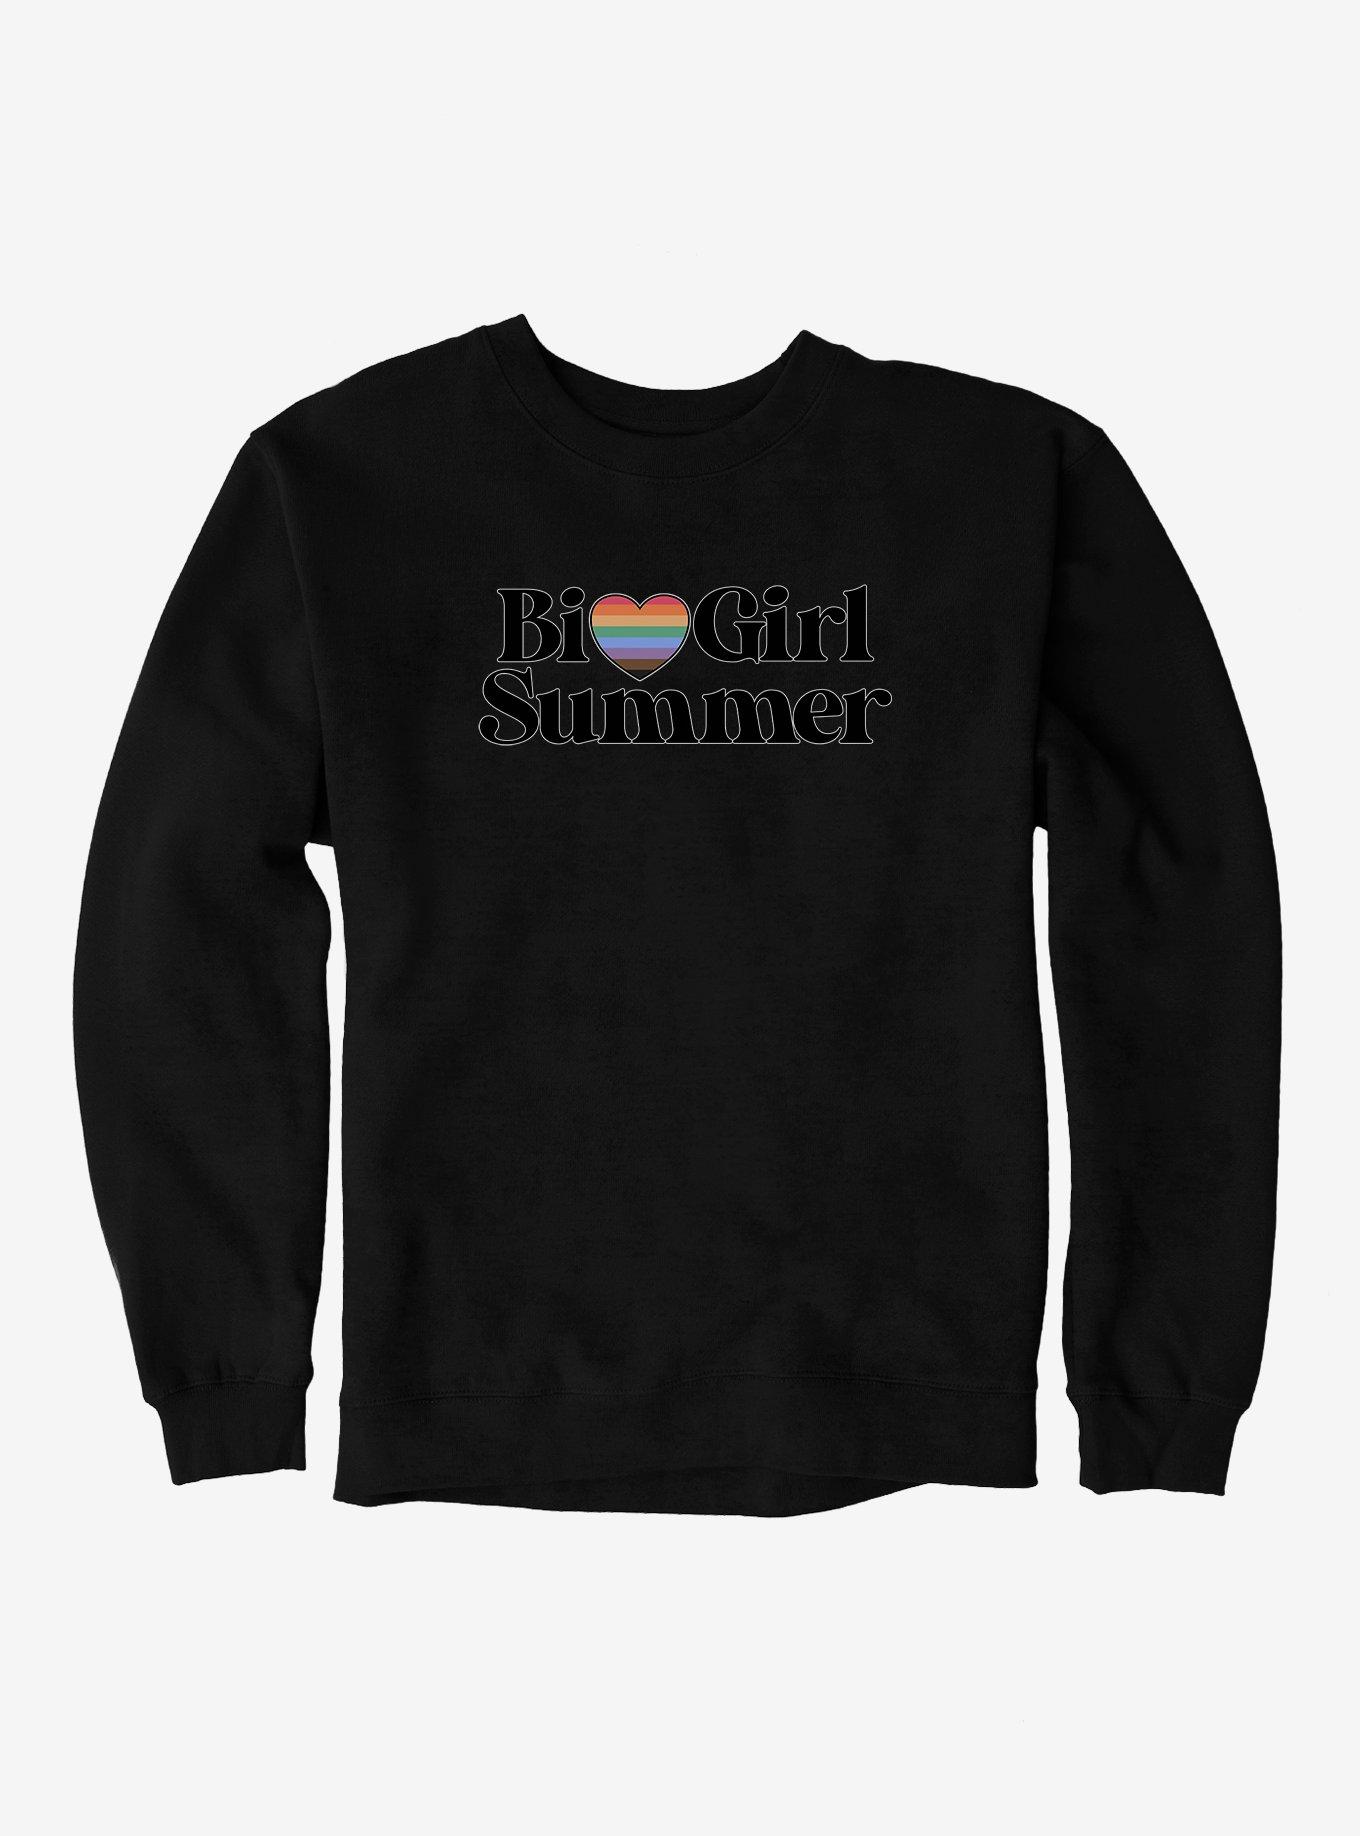 Pride Bi Girl Summer Sweatshirt Hot Topic